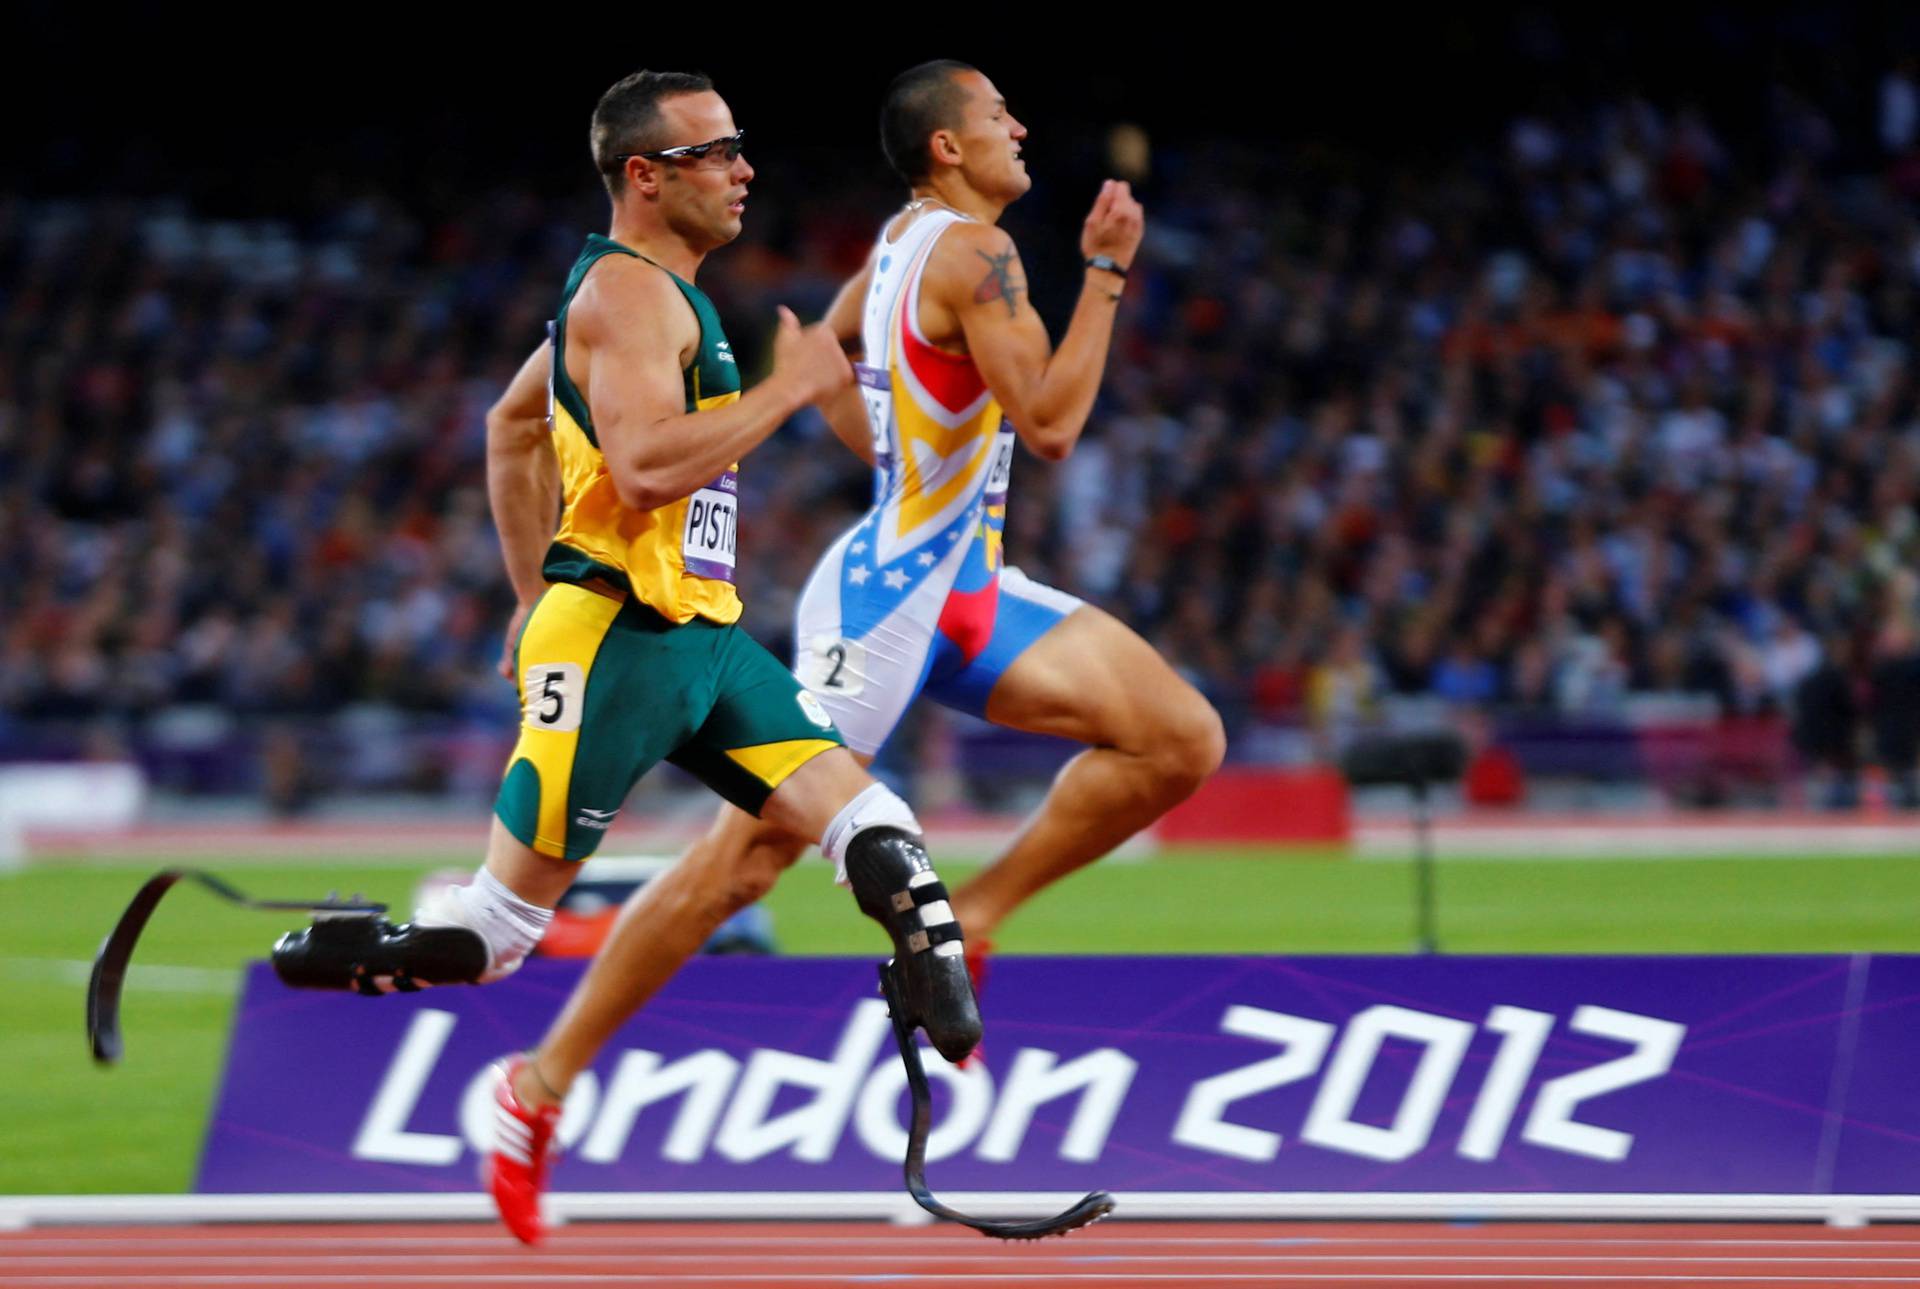 FILE PHOTO: South Africa's Oscar Pistorius runs beside Venezuela's Albert Bravo in the men's 400m semi-final during the London 2012 Olympic Games